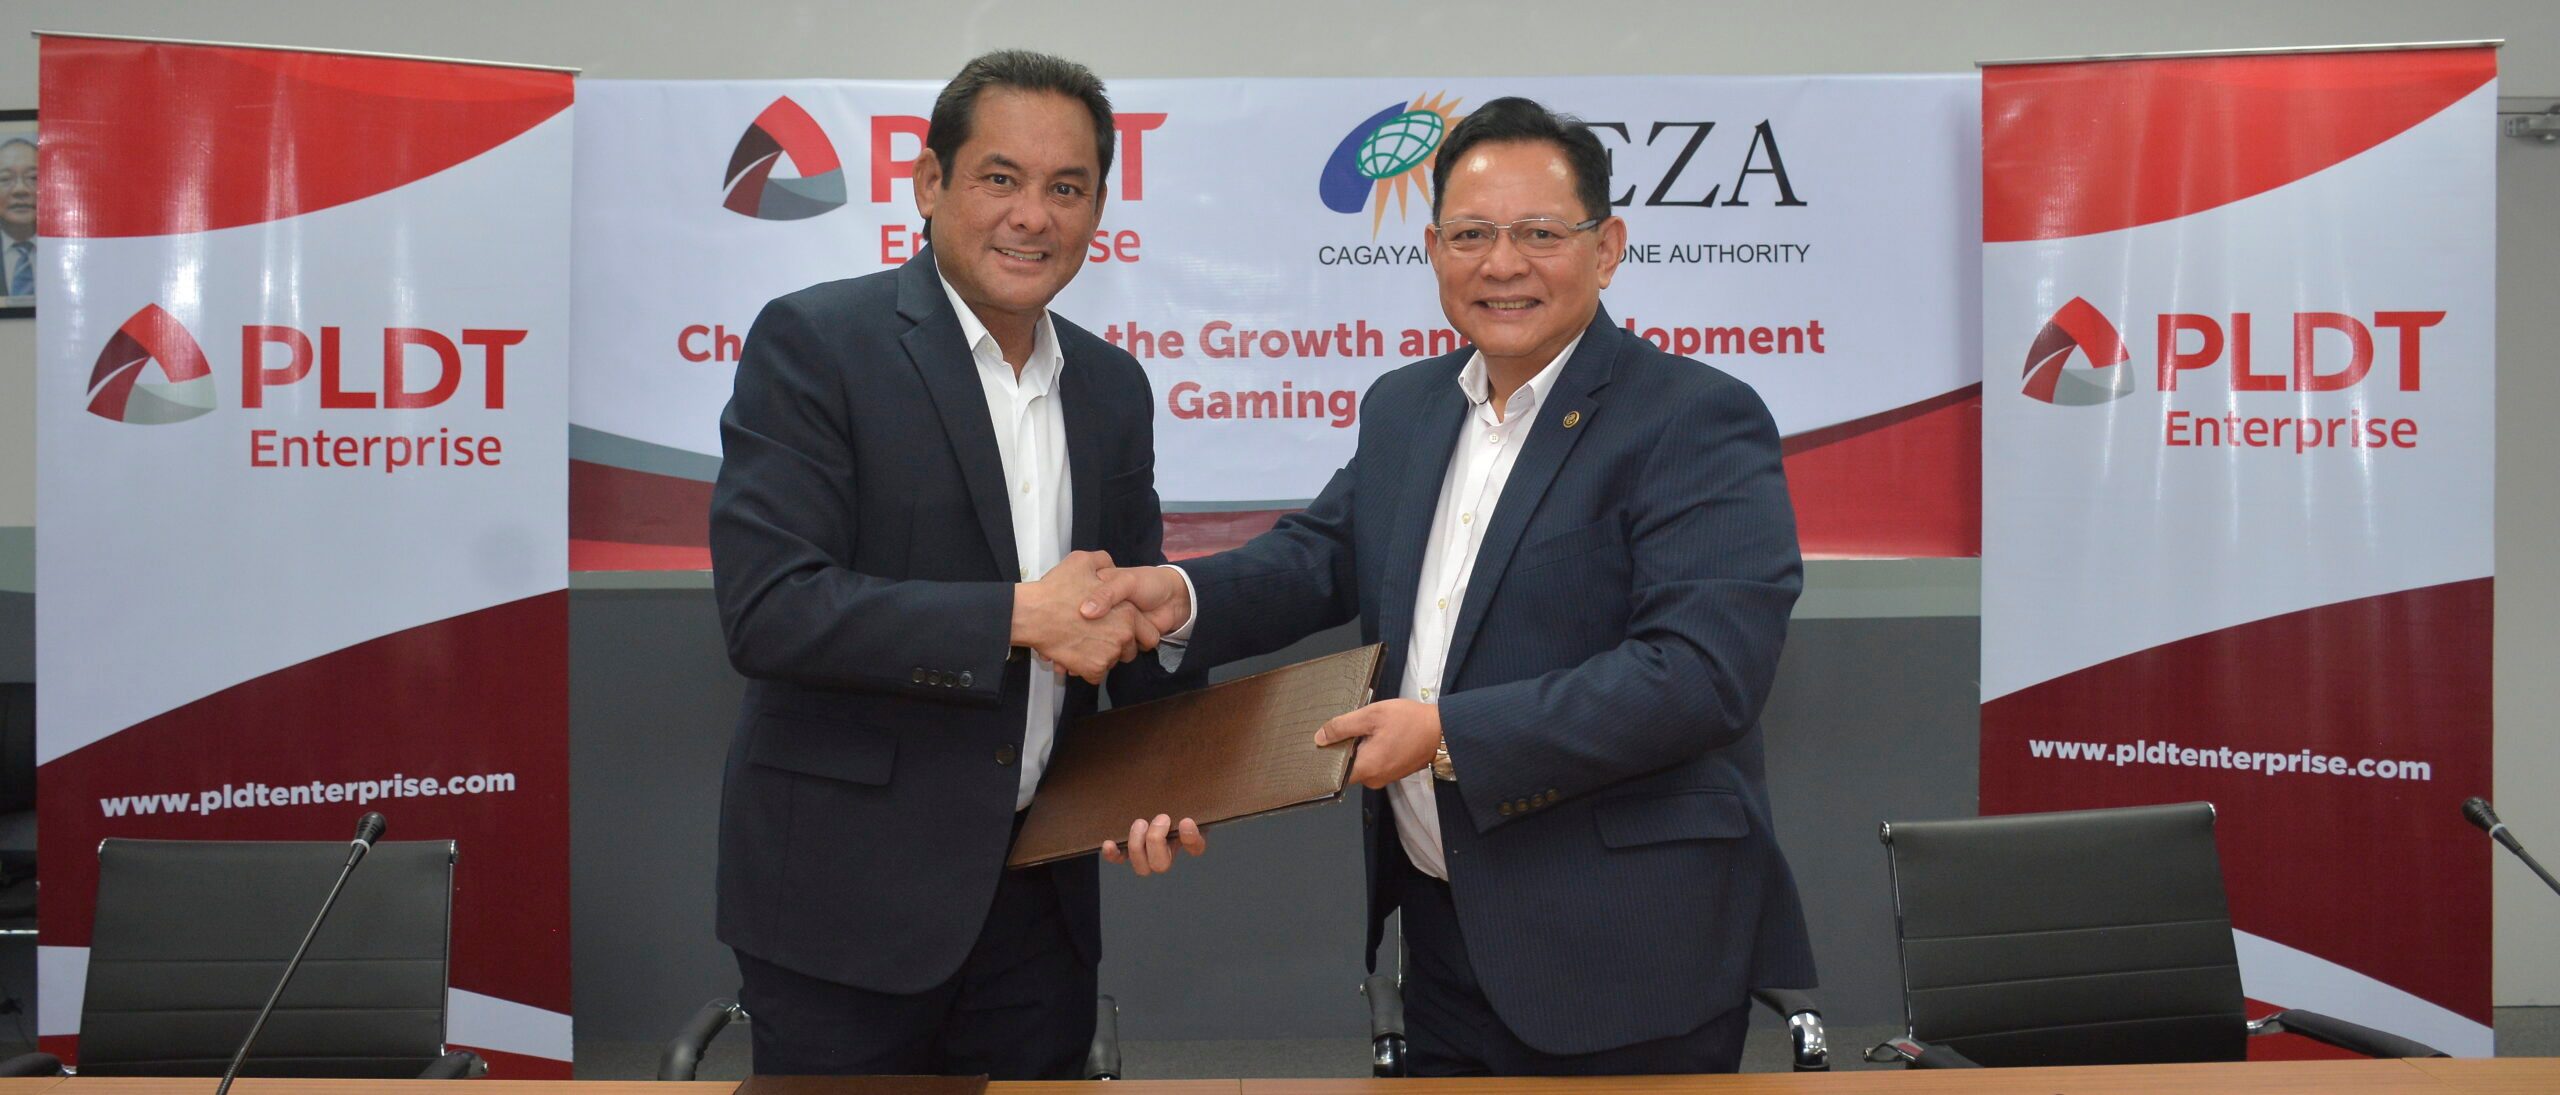 Cagayan Economic Zone Authority partners with PLDT Enterprise